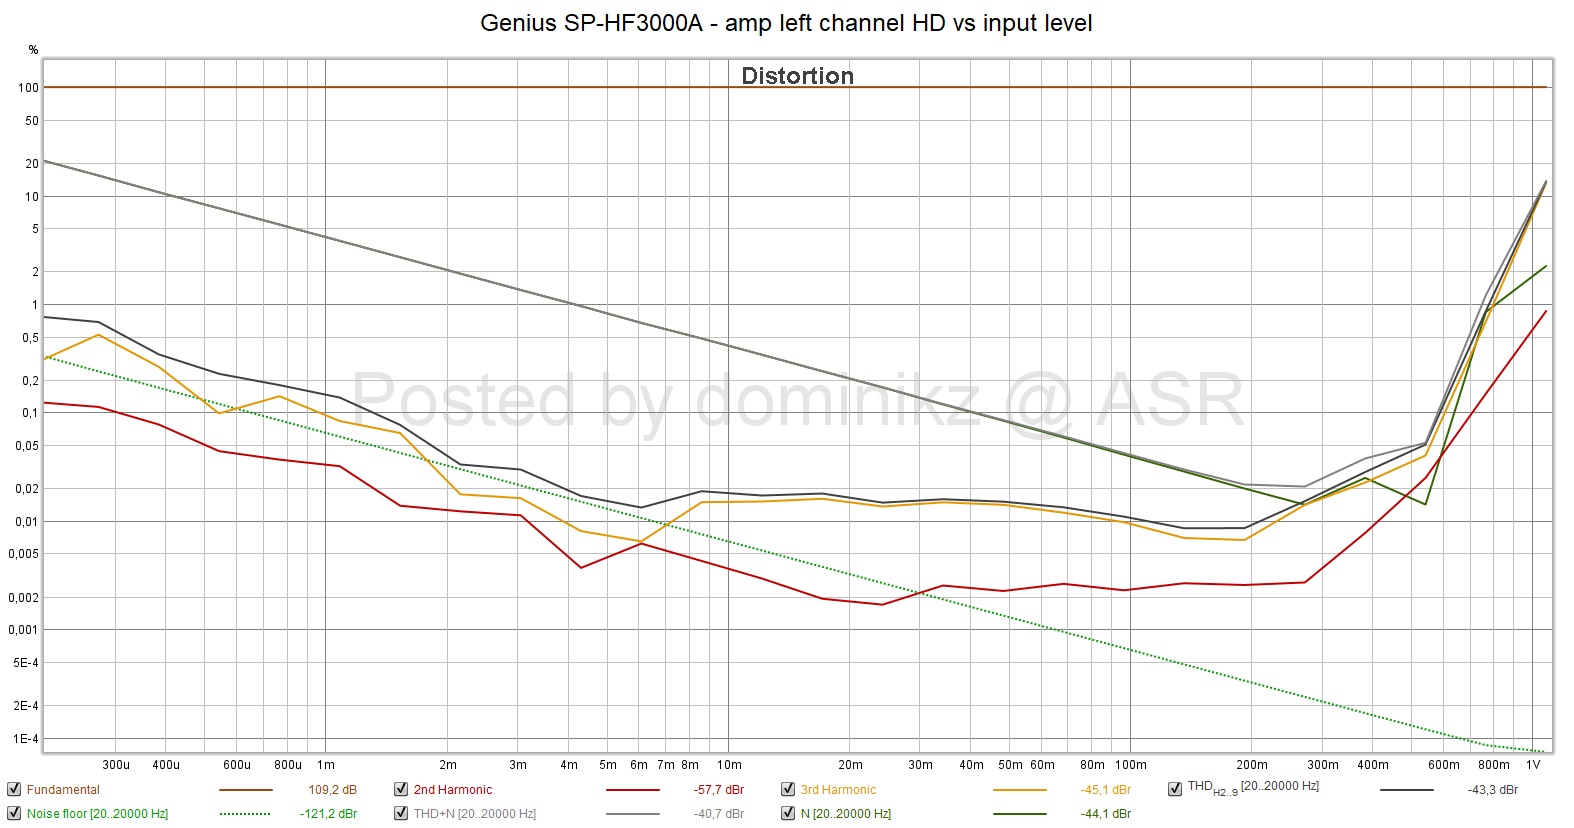 Genius SP-HF3000A - amp left channel HD vs input level.jpg